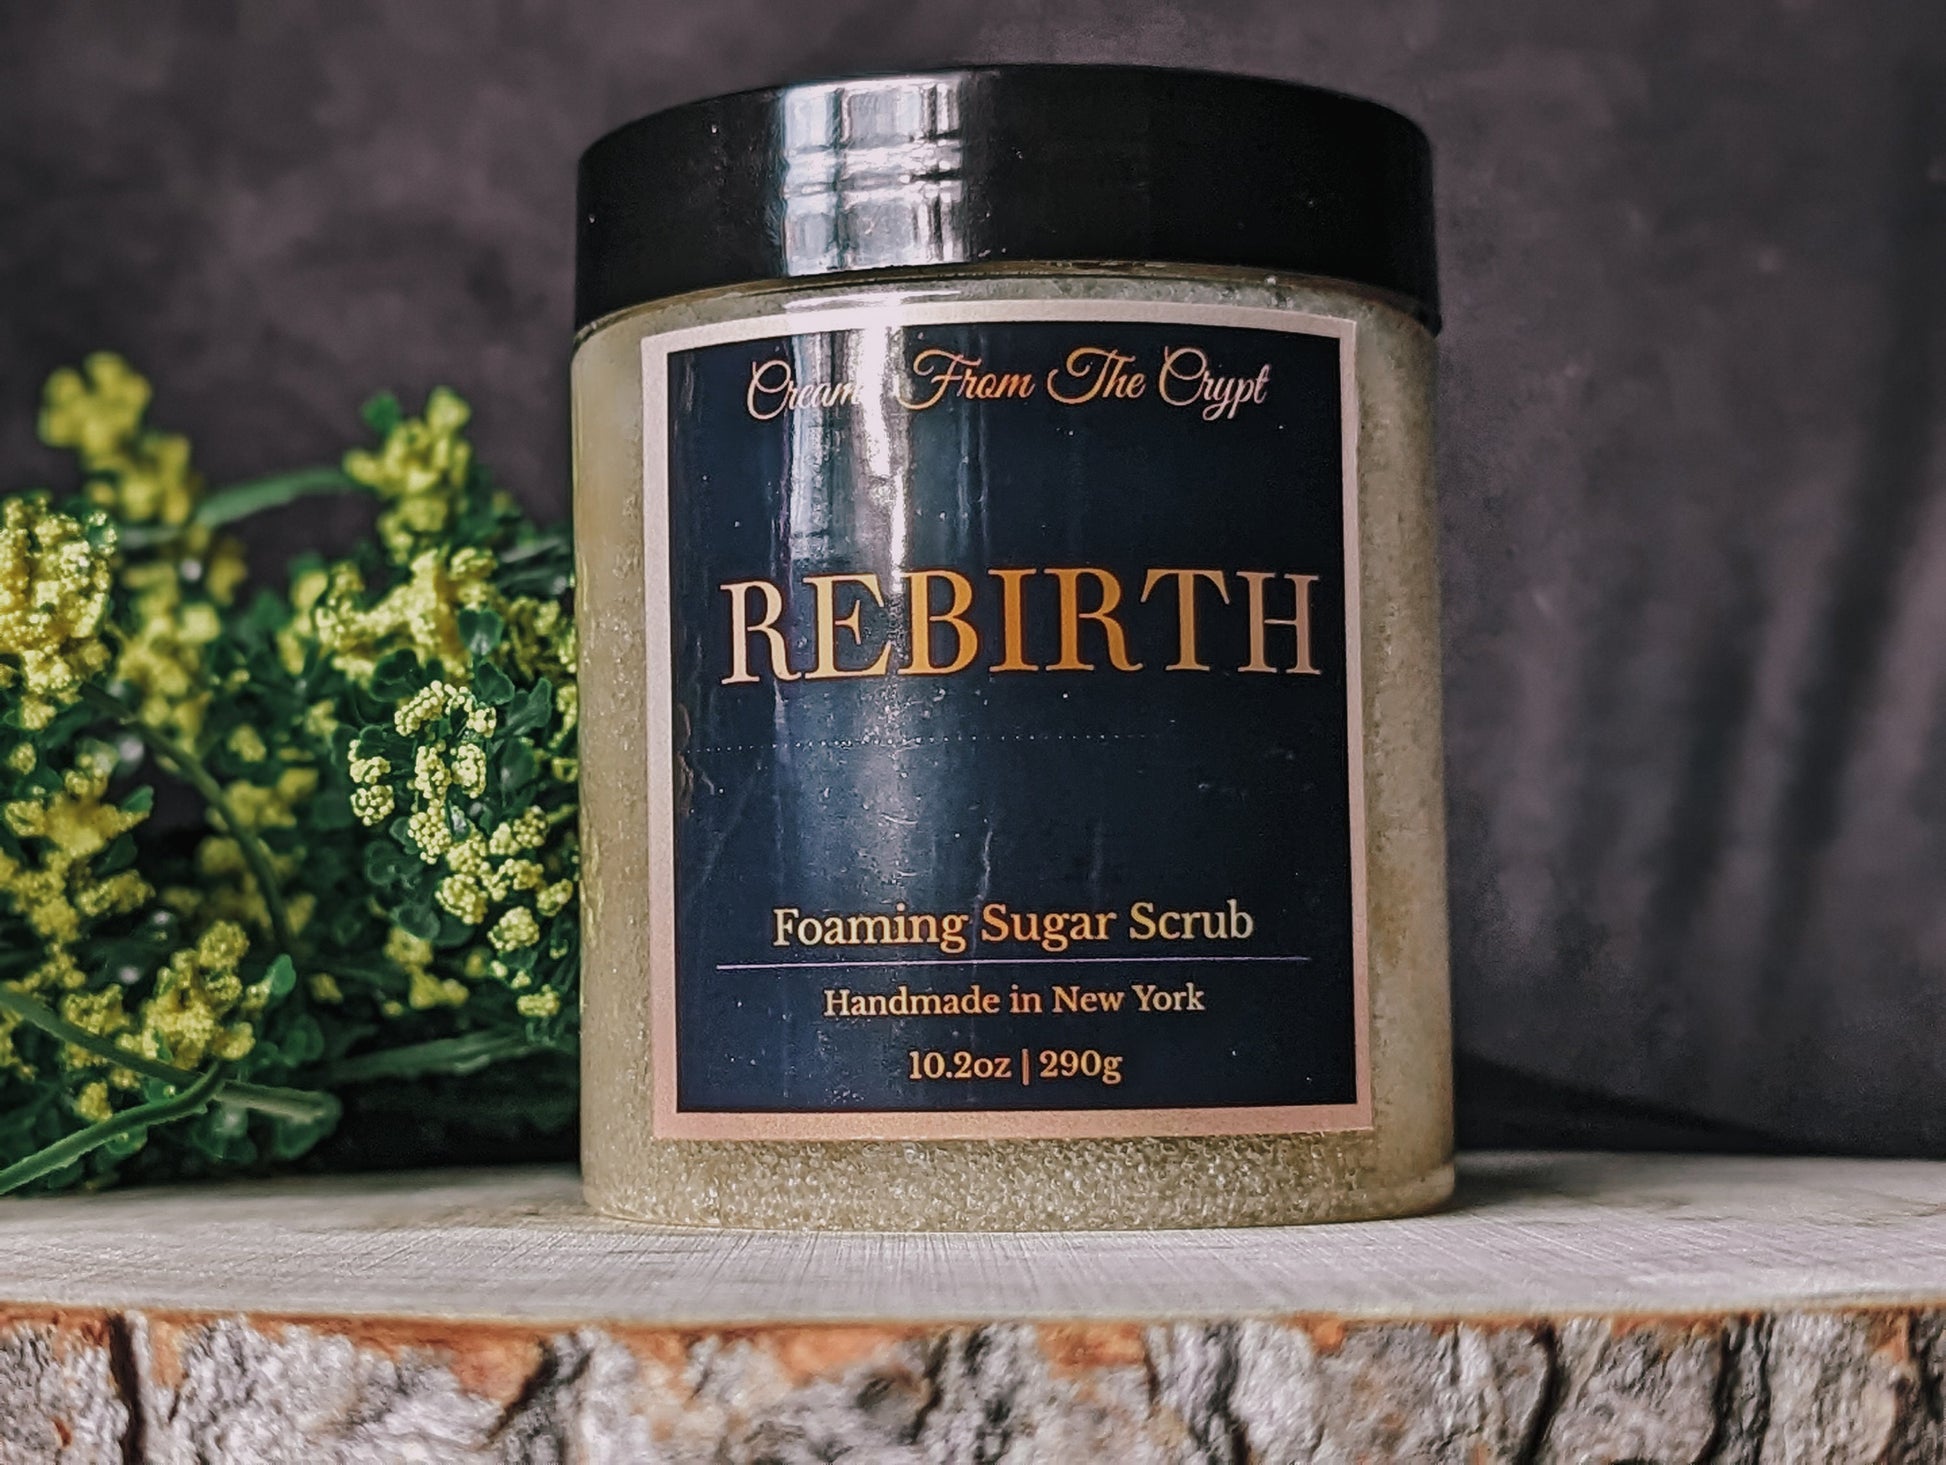 REBIRTH - Linen and orchid scented foaming sugar scrub, body polish, soap + exfoliant, Fresh fragrance, spring, sulfate free, skincare